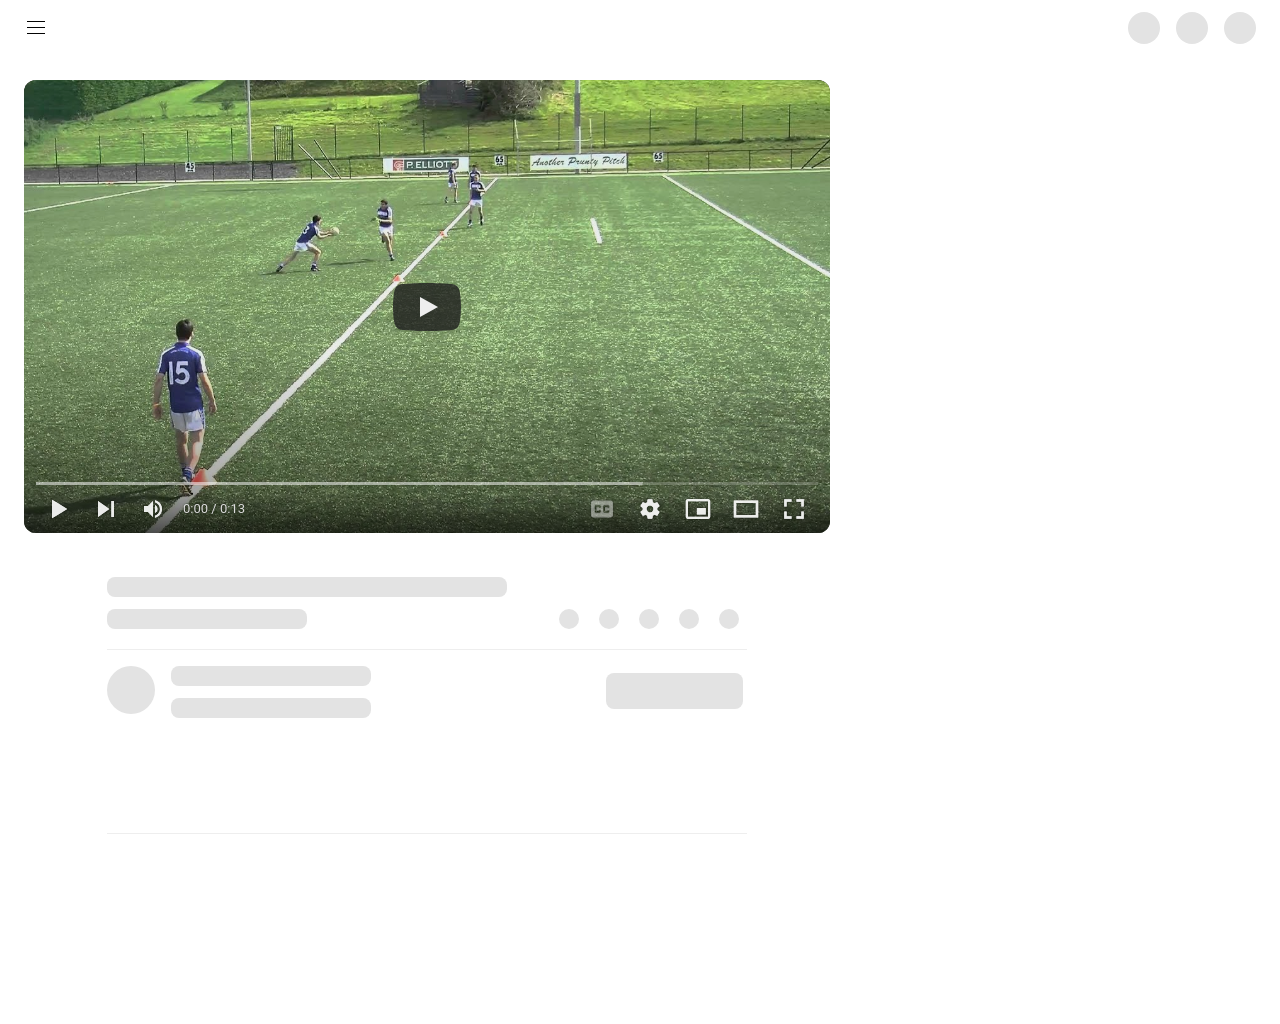 Gaelic Football Skills - Kick pass drill